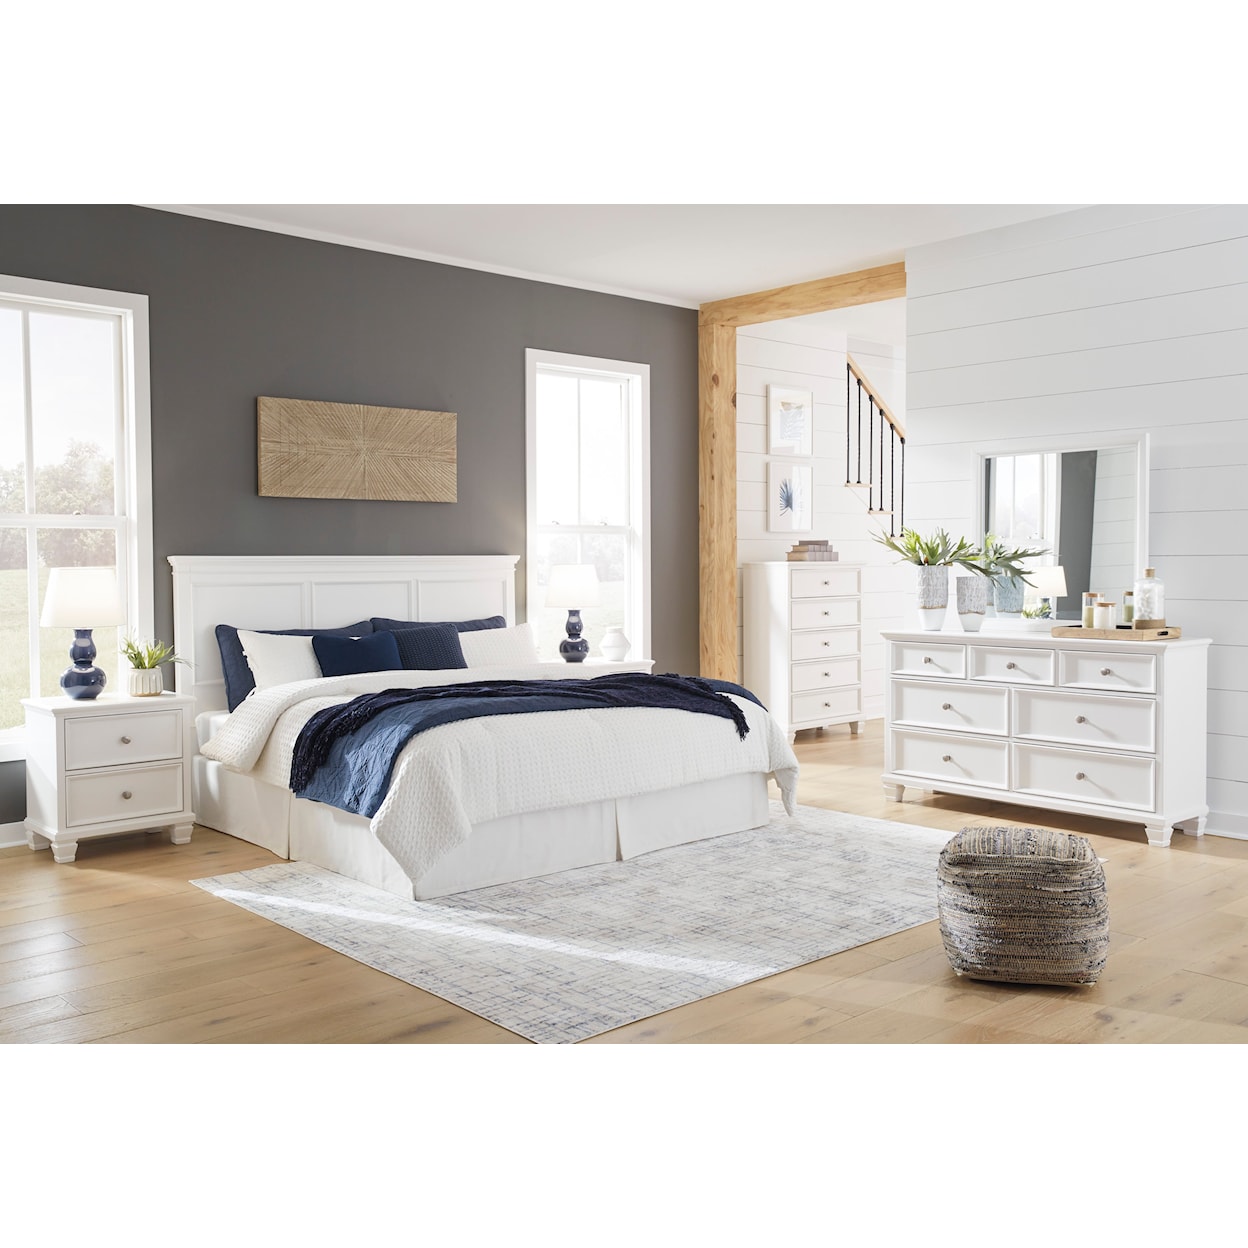 Ashley Furniture Signature Design Fortman Queen Bedroom Set